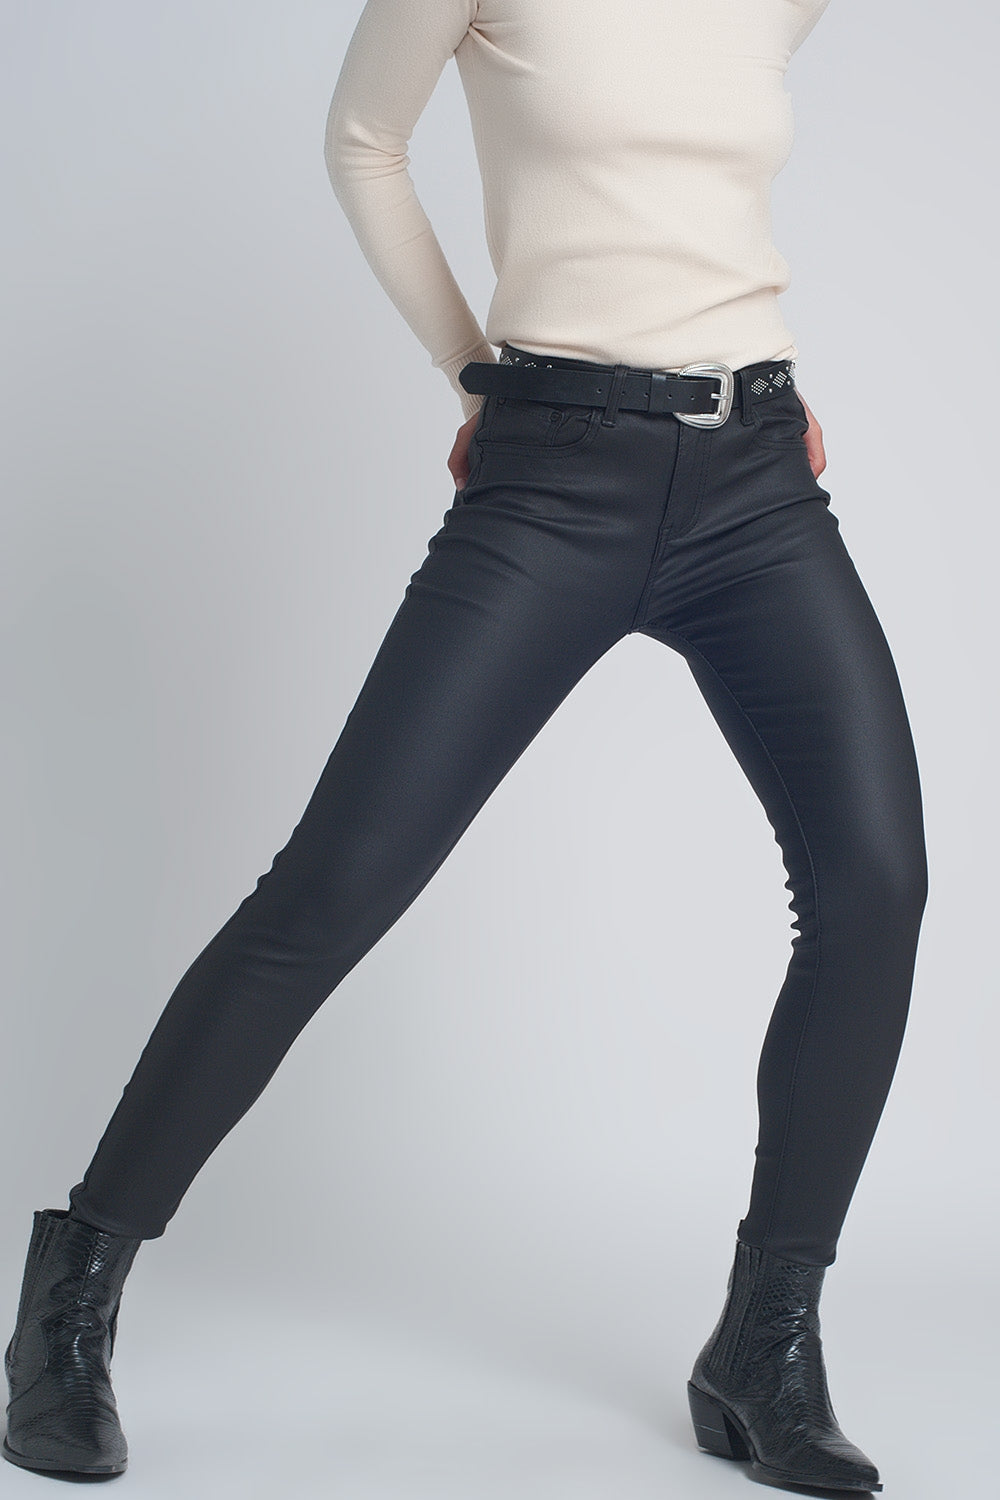 Faux leather skinny trousers in black colour Szua Store